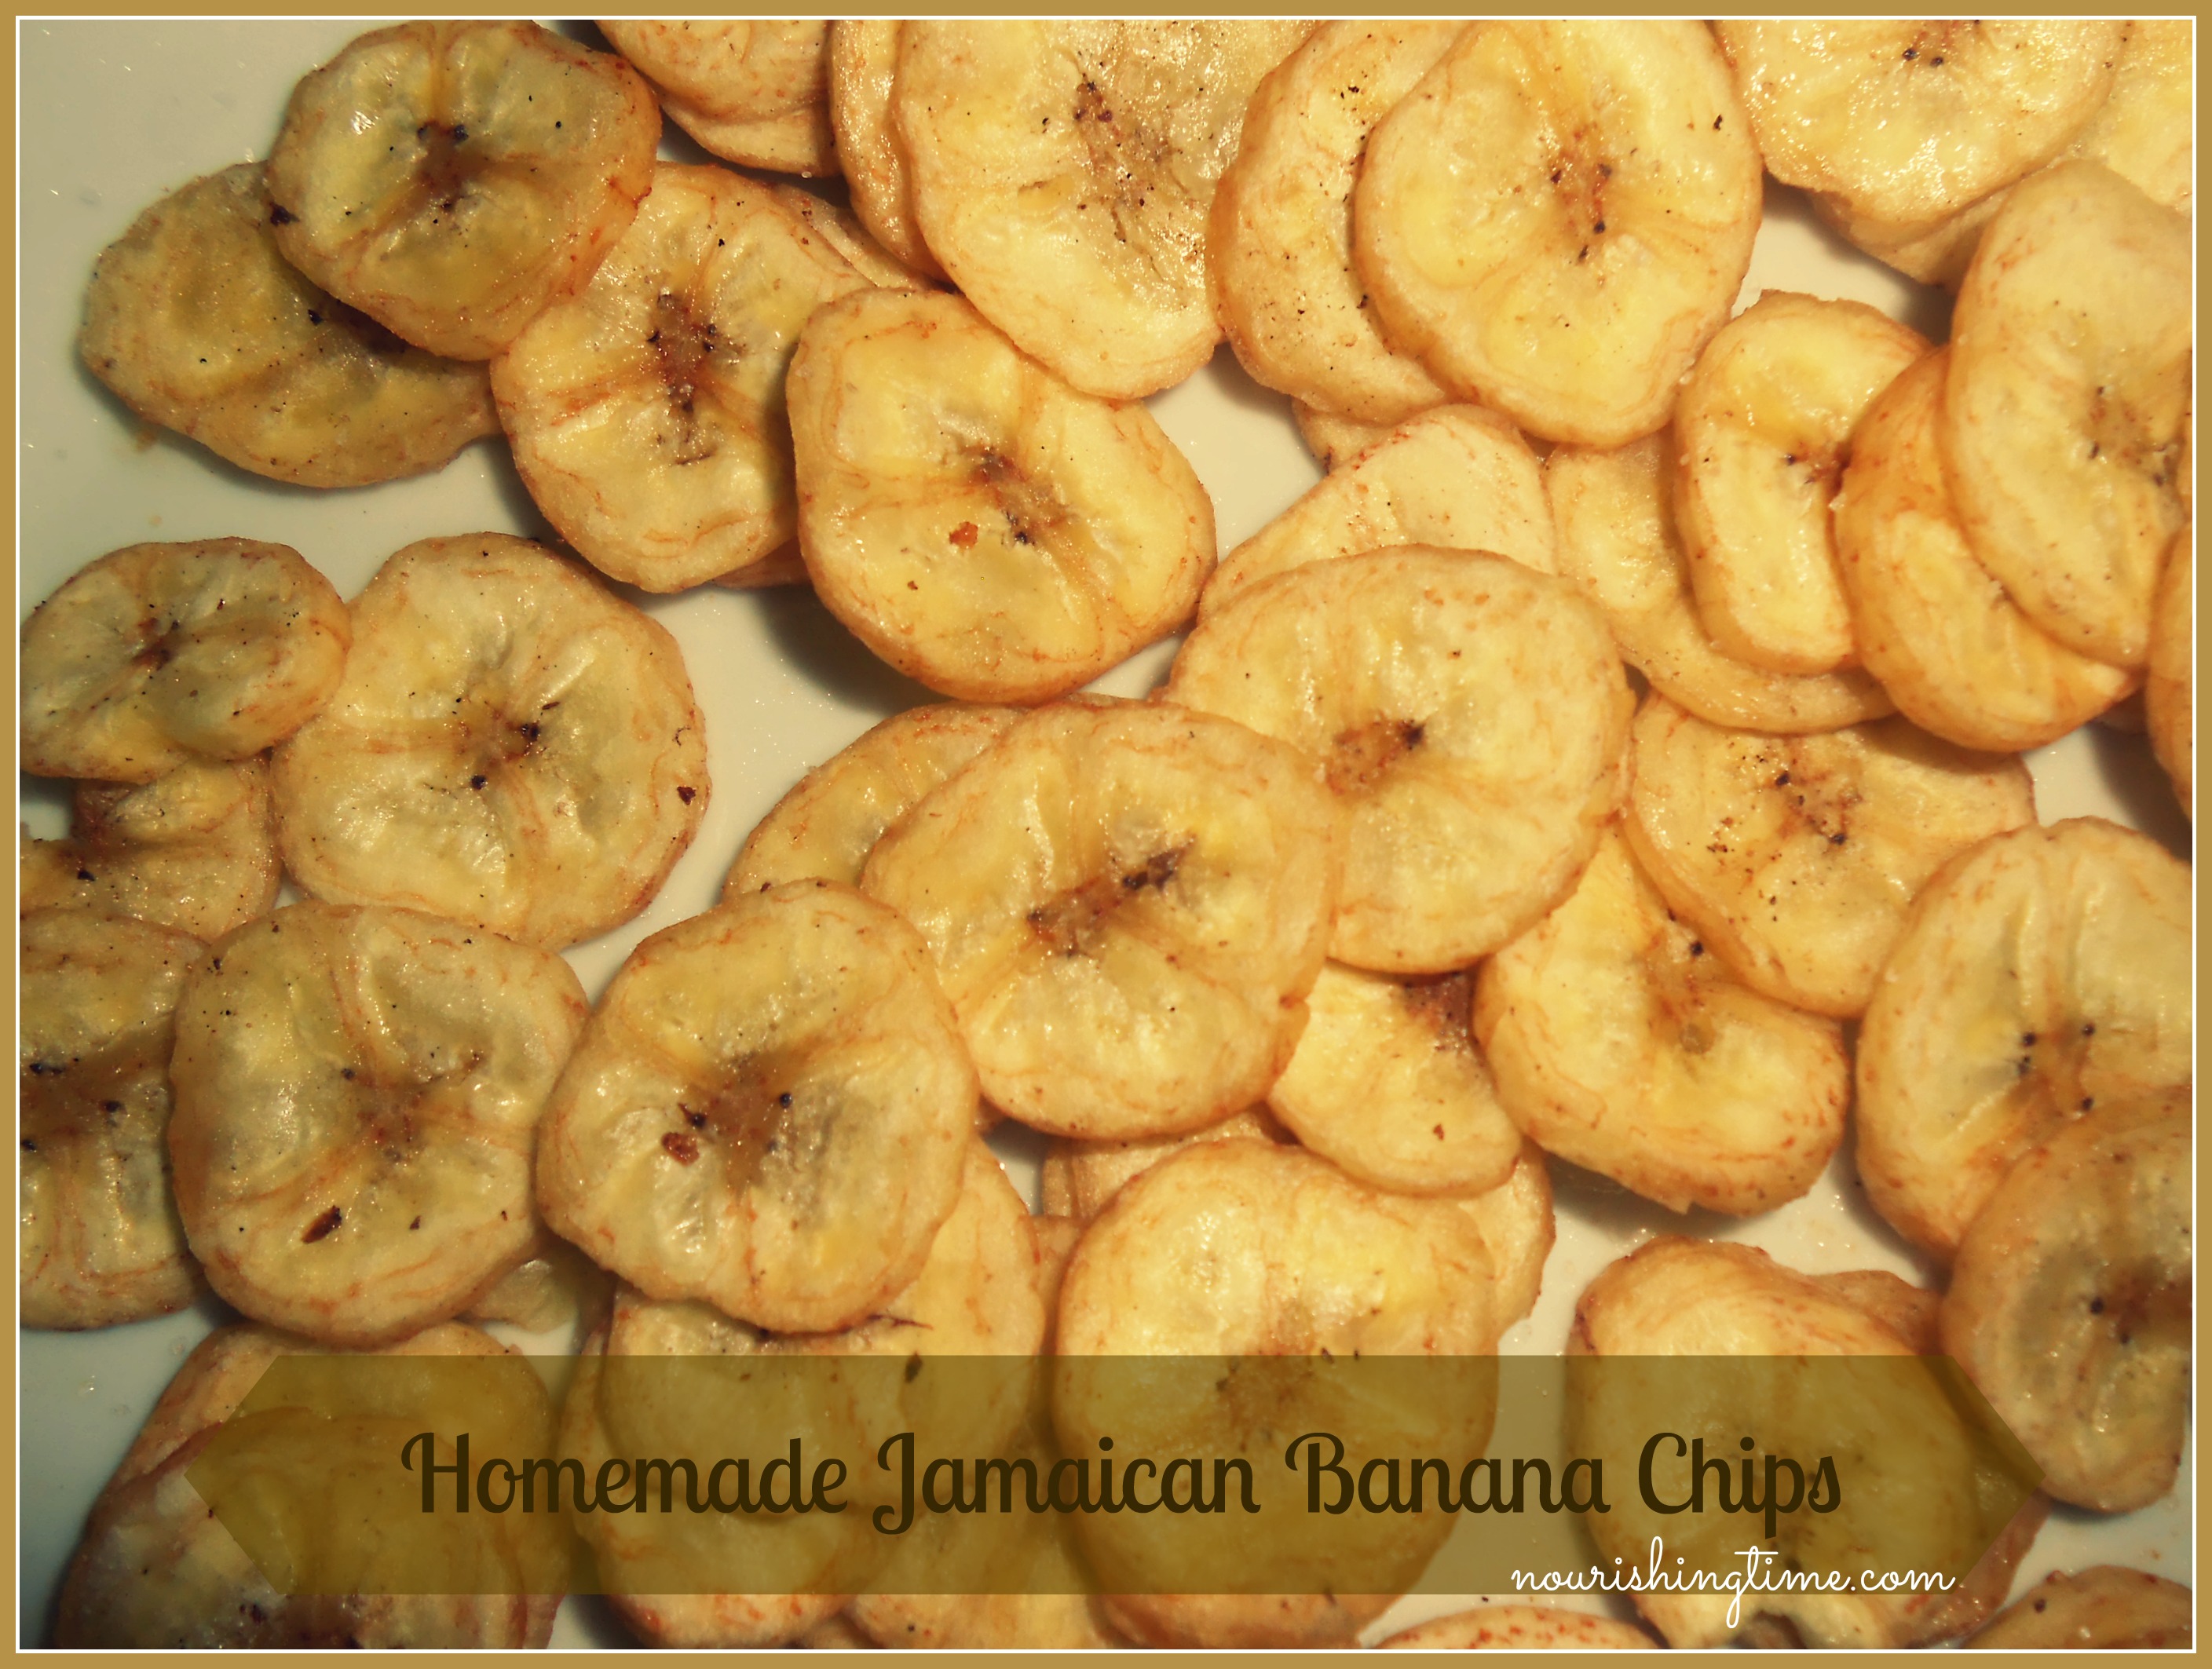 Homemade Jamaican Banana Chips